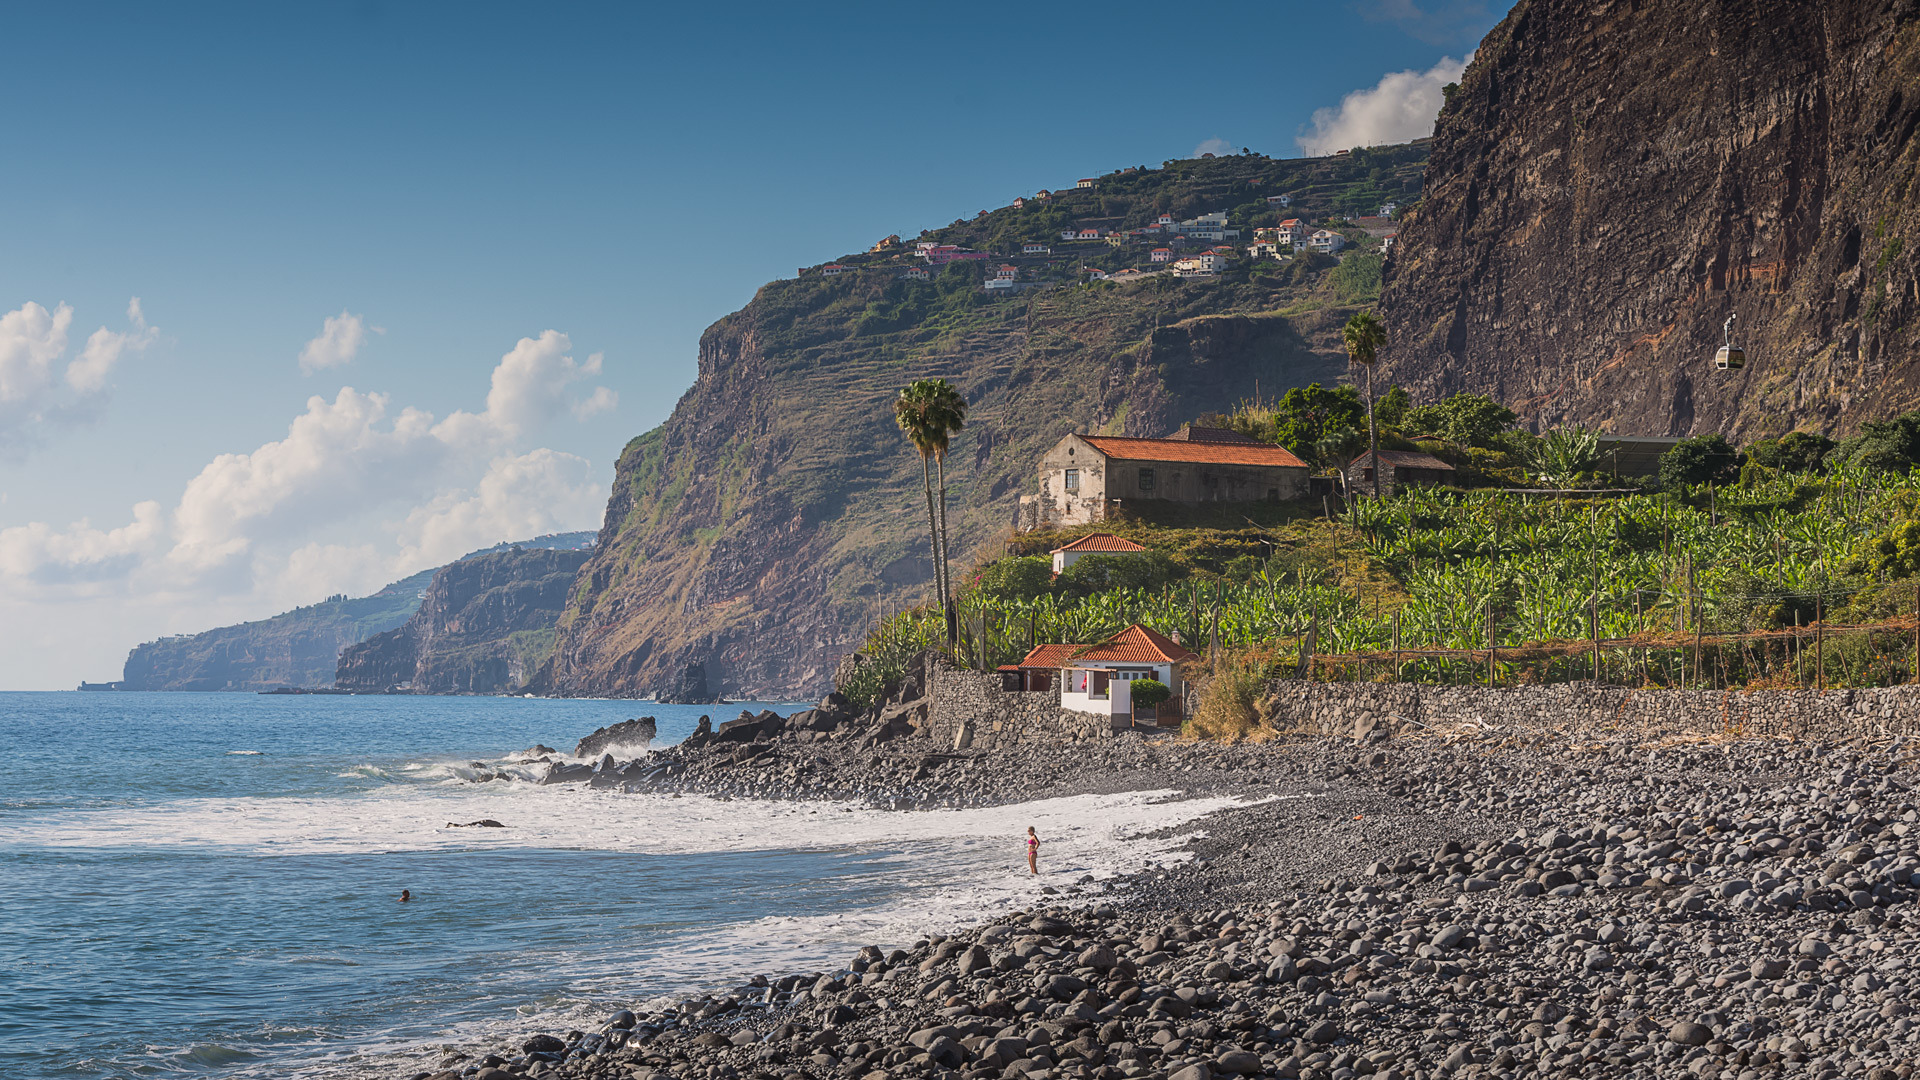 Costa sul da Madeira 3